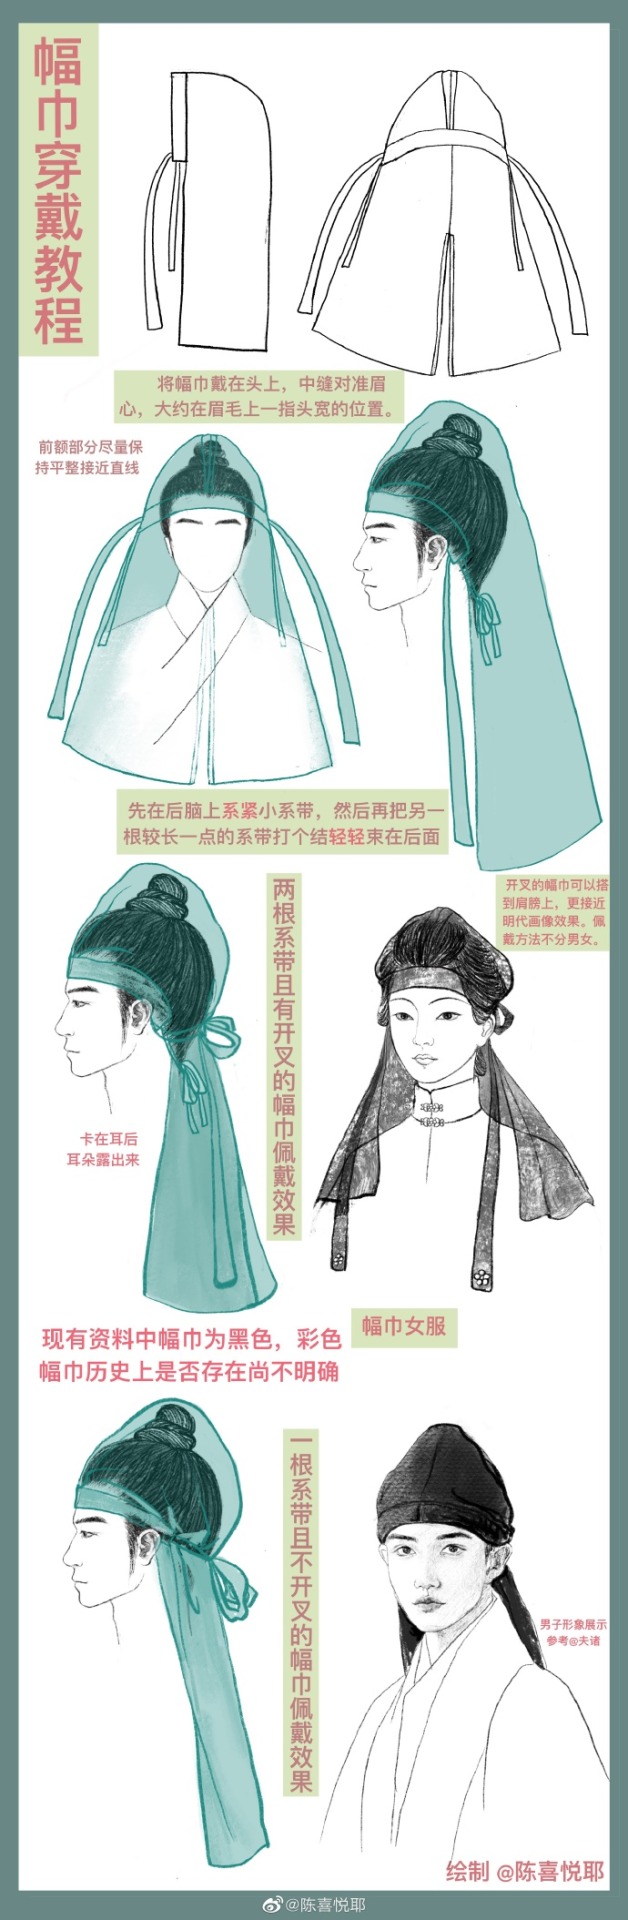 ivoci - Fujin 幅巾, Ancient China Scholars Headgear - 4